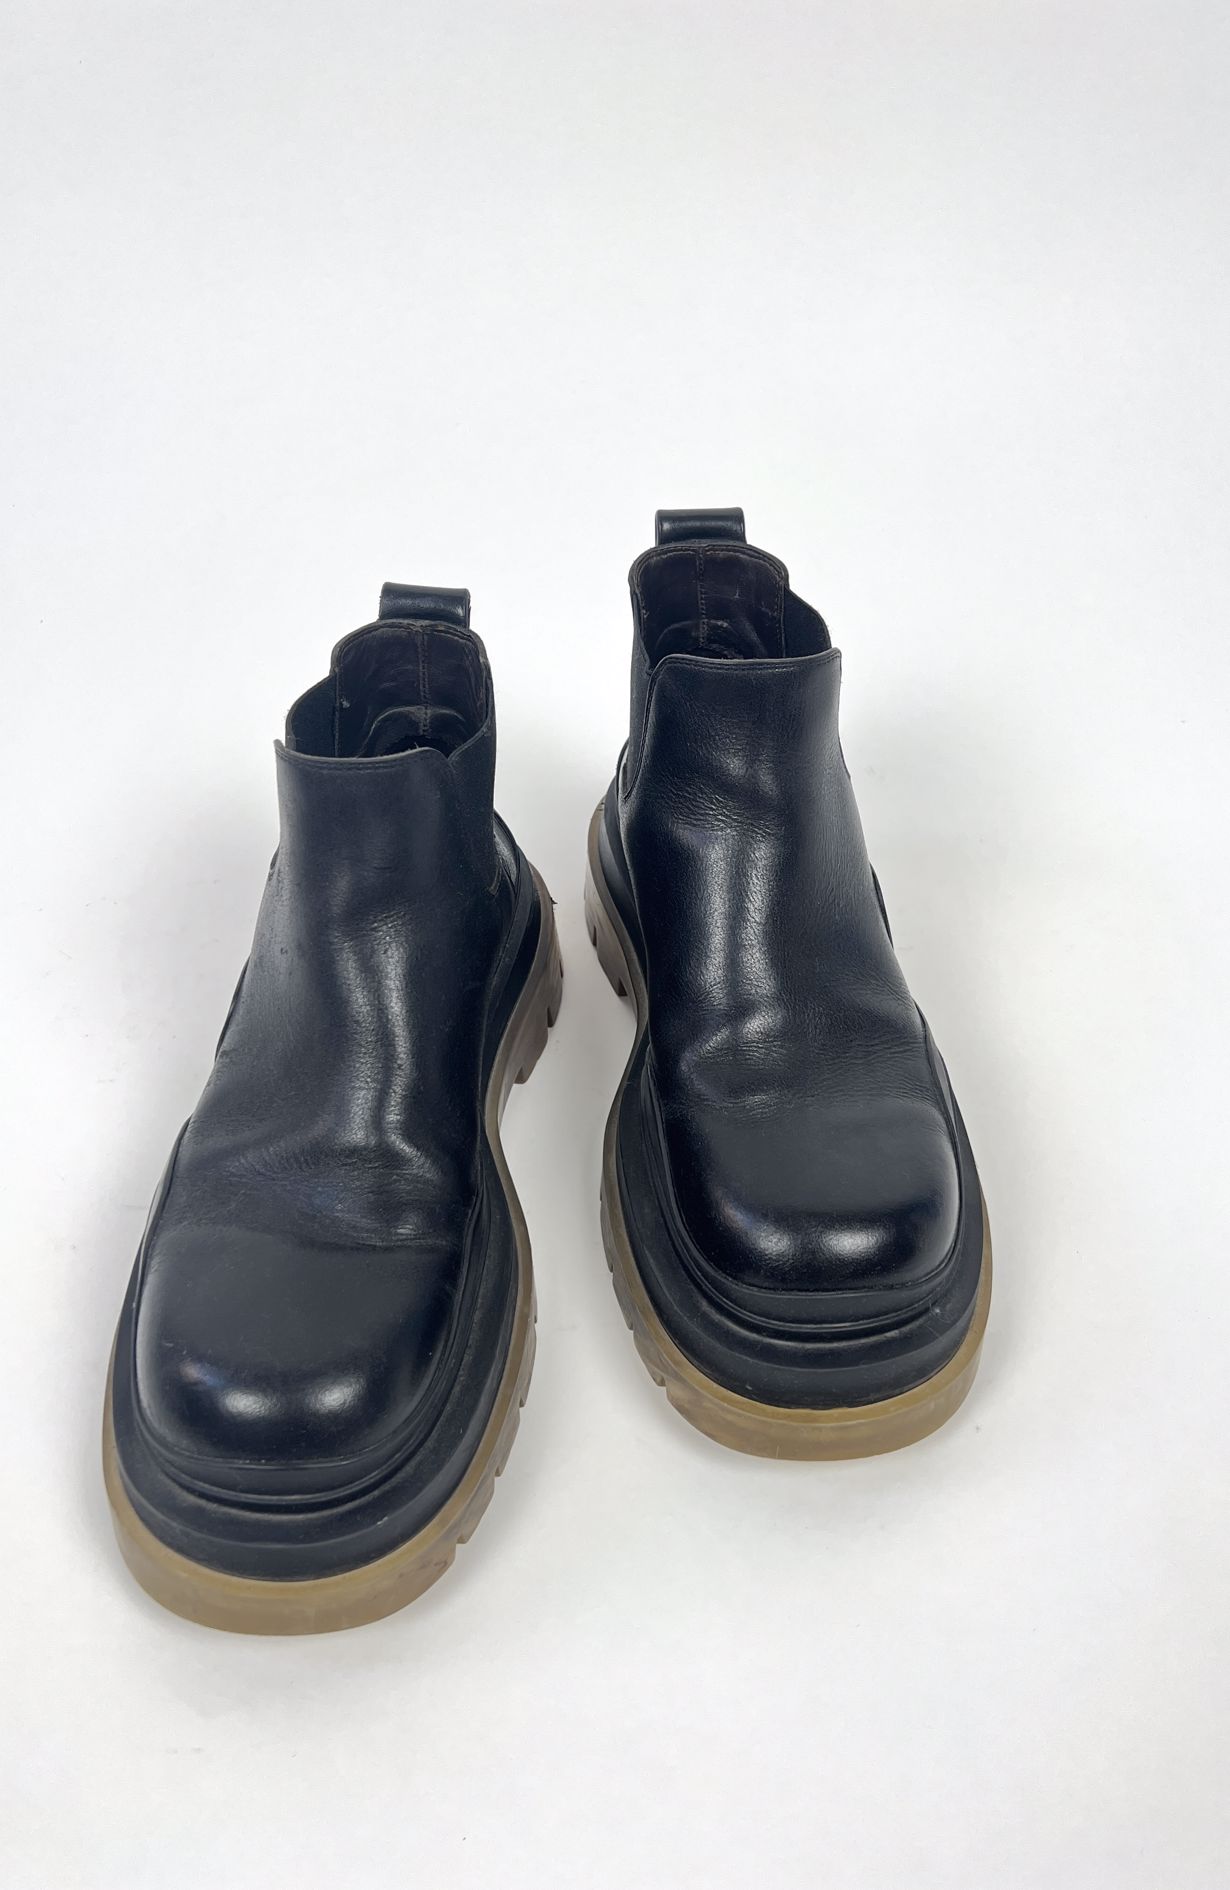 Bottega Veneta boots black size 38,5 w dust bag 